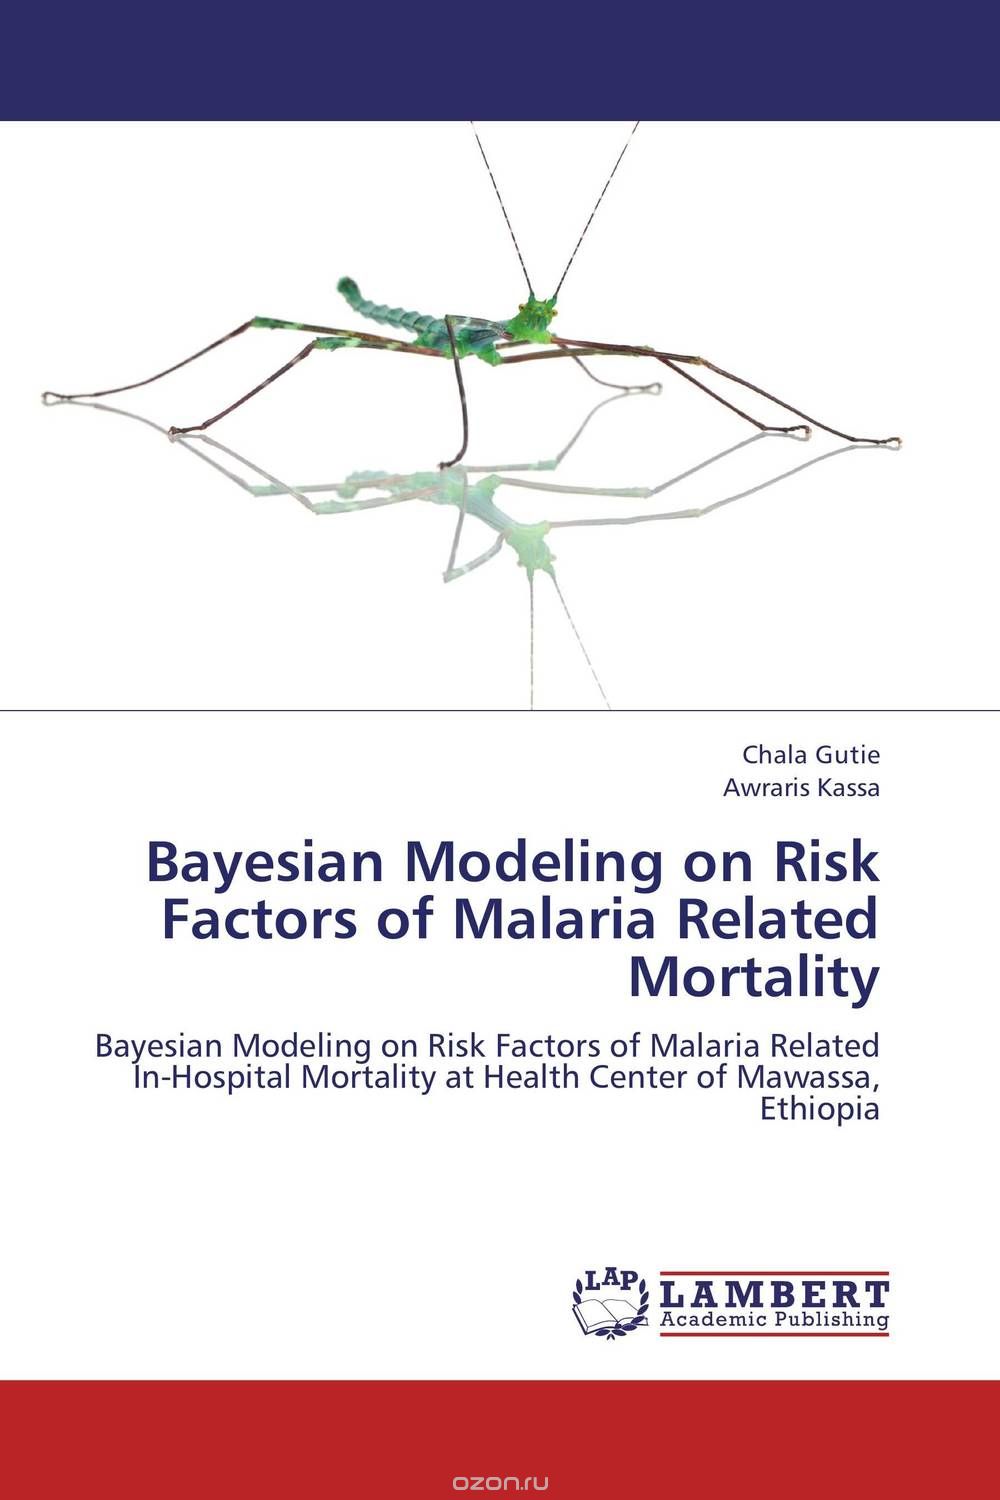 Скачать книгу "Bayesian Modeling on Risk Factors of Malaria Related Mortality"